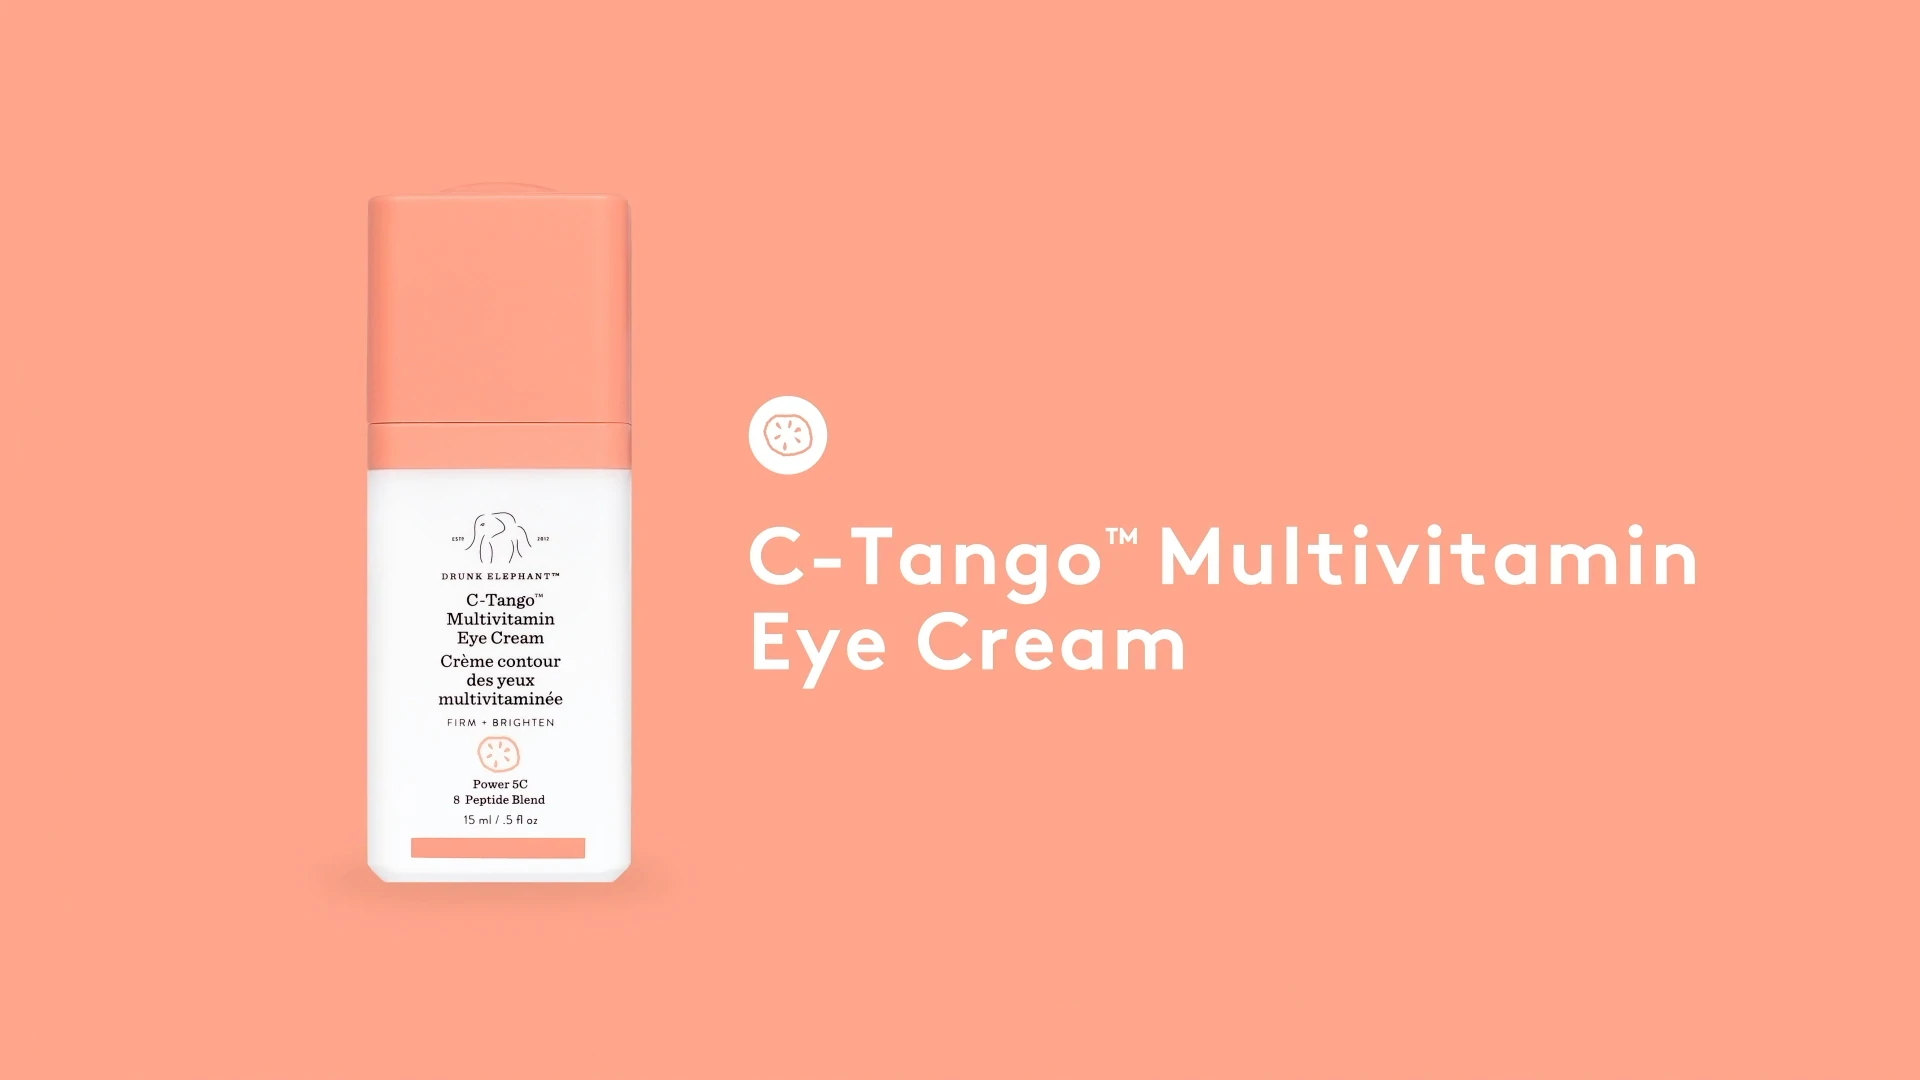 video introducing Drunk Elephant C-Tango Multivitamin Eye Cream